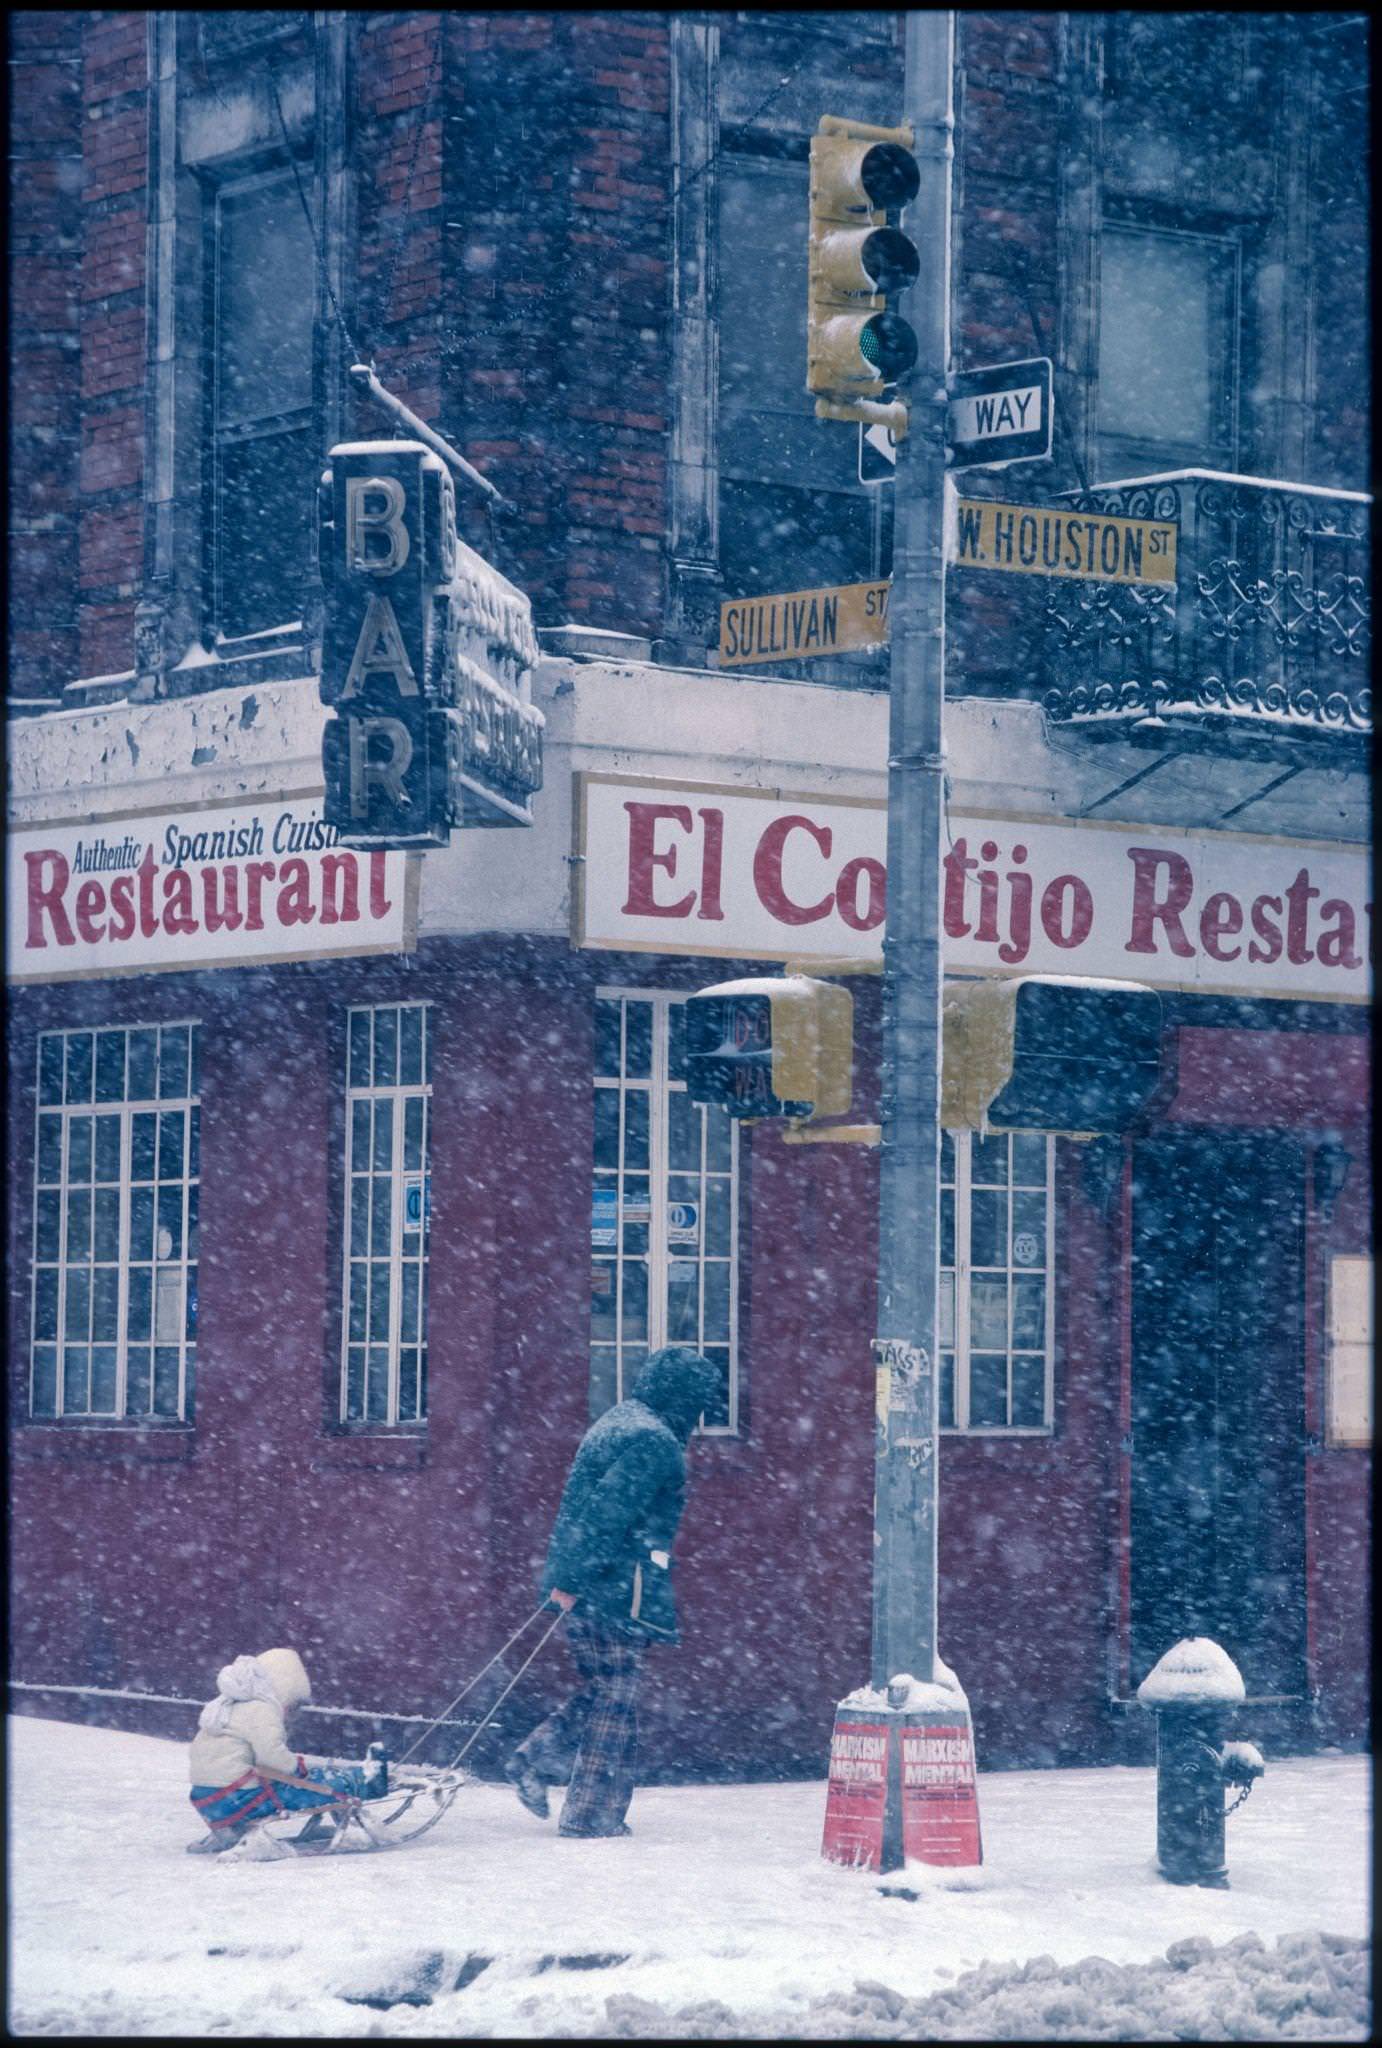 Adult Pulls A Child On A Sled On West Houston Street, Greenwich Village, Manhattan, 1982.